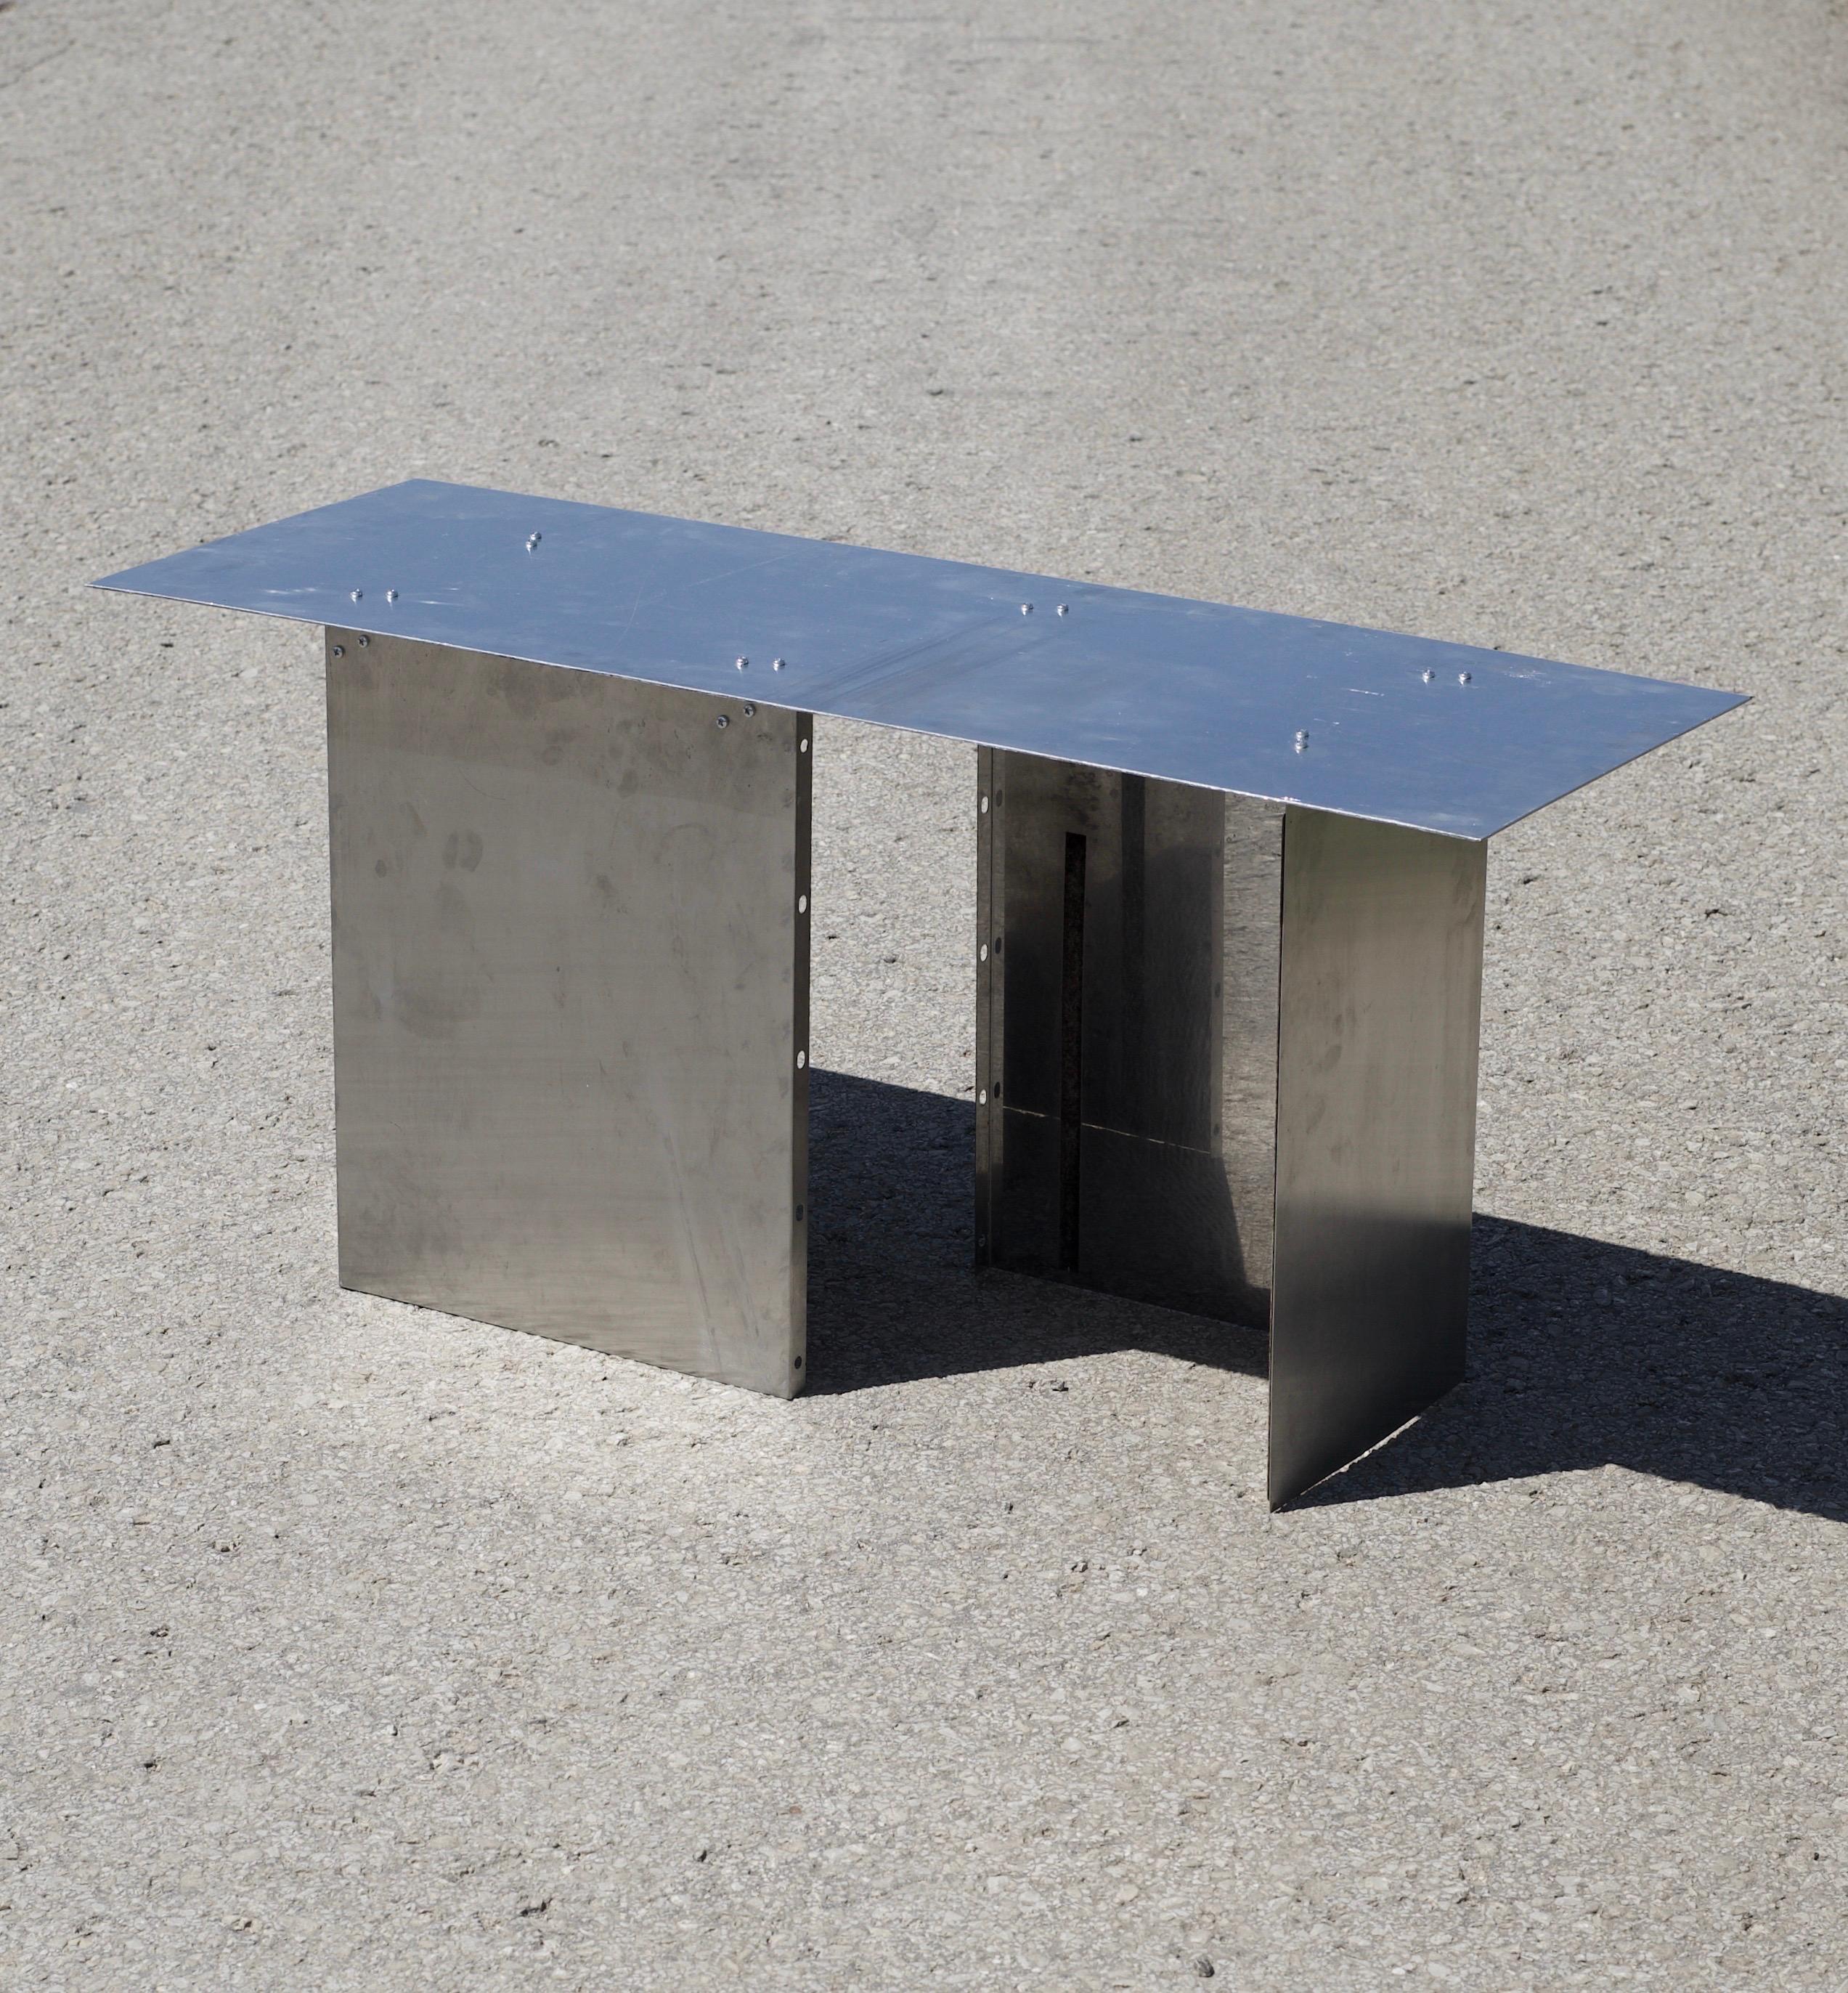 Loungetisch 'S0-2H' von Maximilian Hofmann
Abmessungen: T 40, B 100, H 45 cm
MATERIAL: Aluminium.
Ausführung: gewalztes und poliertes Aluminium.
Gewicht: 9,8 kg. 
MATERIAL Dicke: 0,4 cm

S0-2H